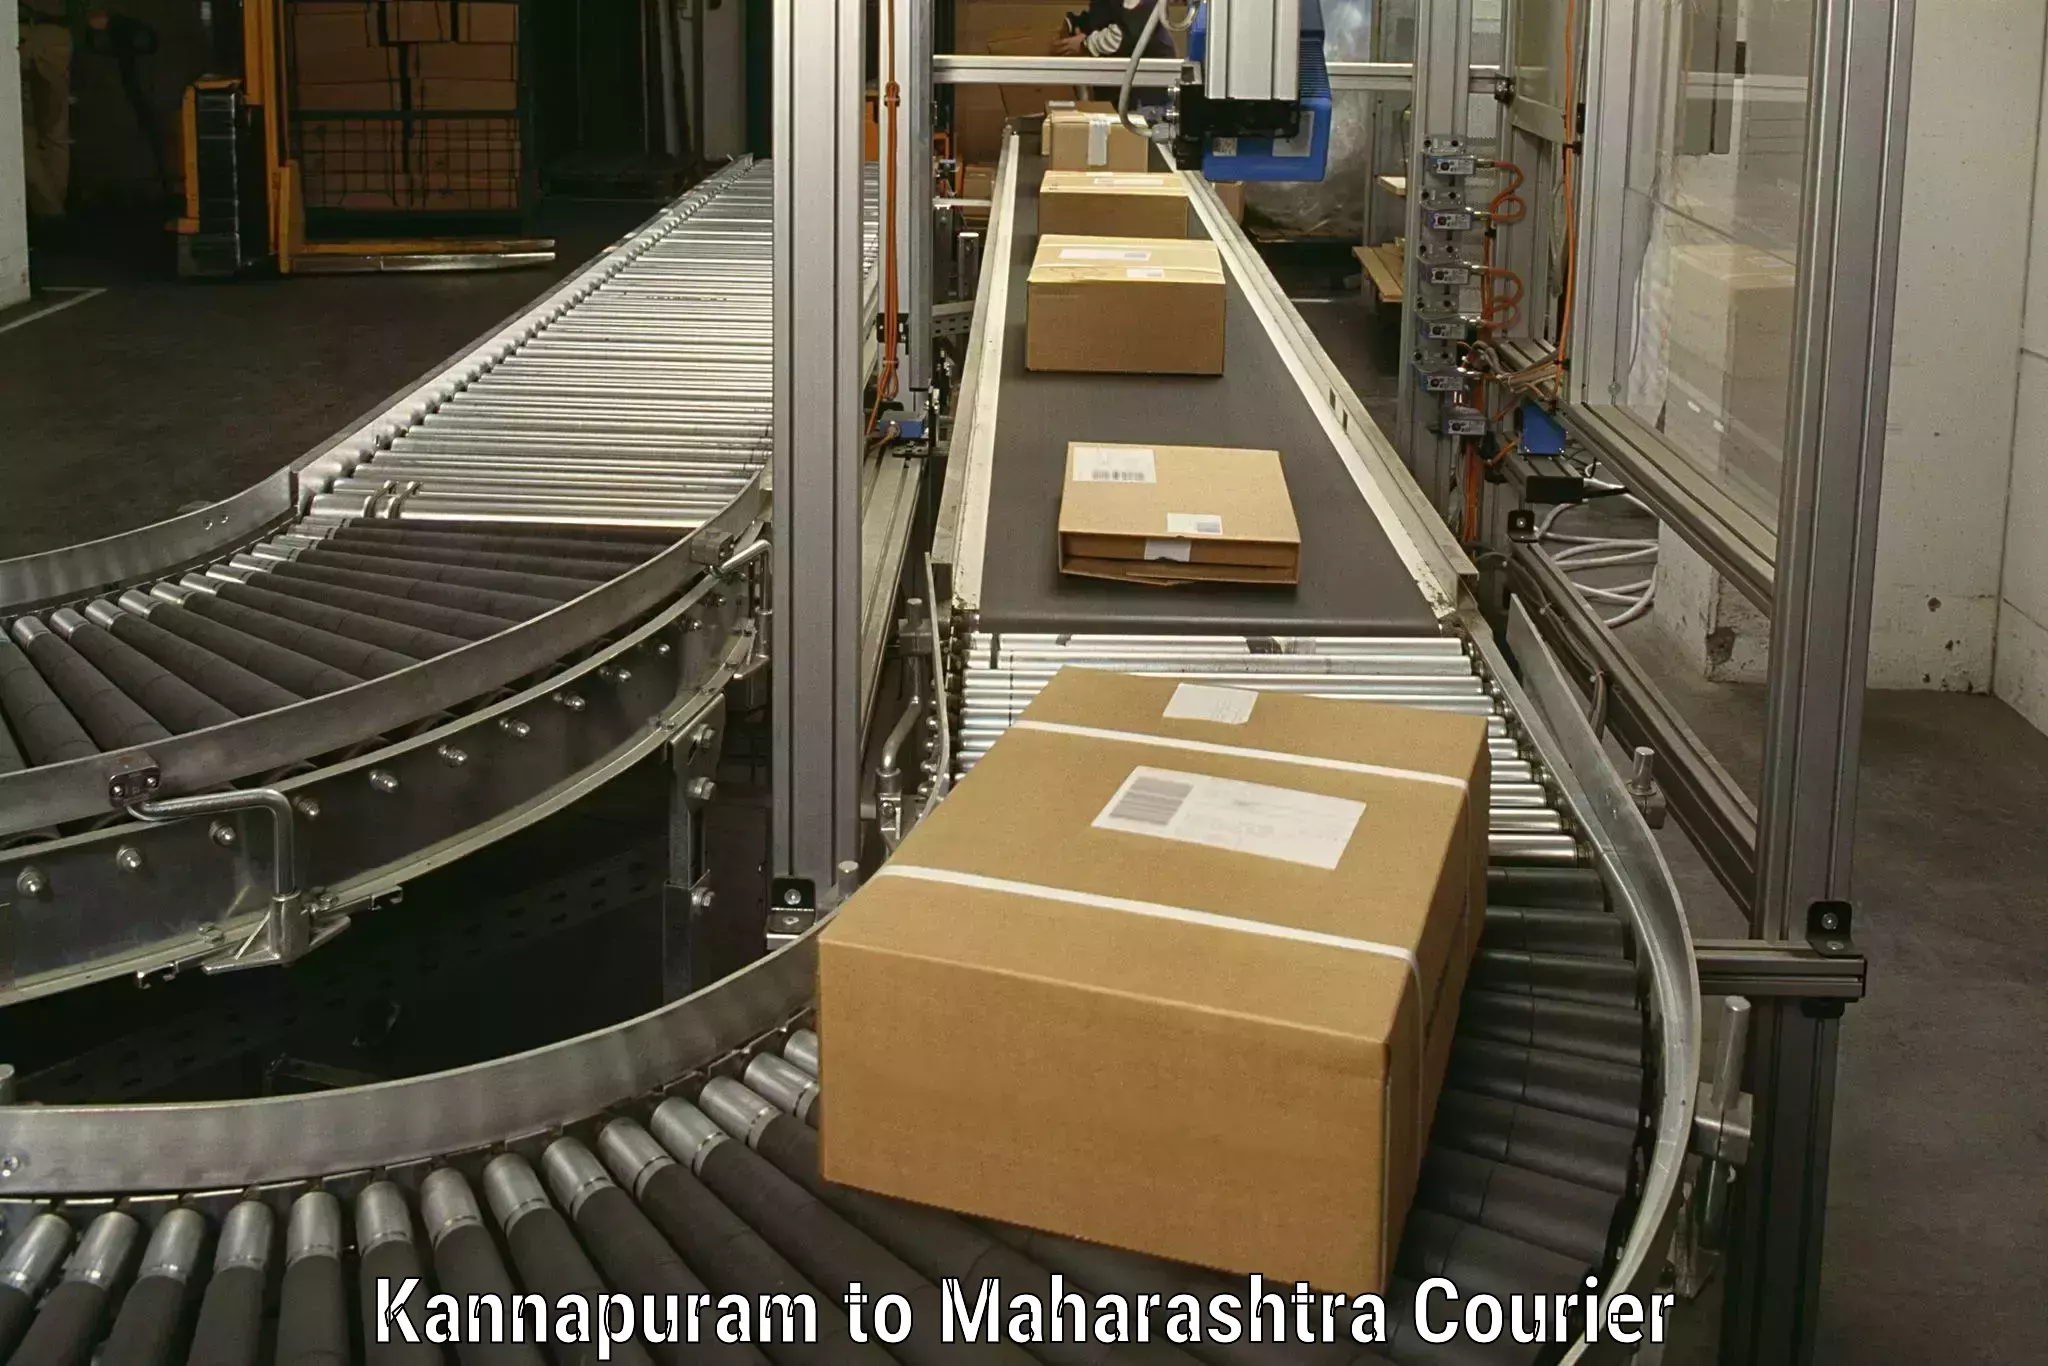 Furniture relocation experts Kannapuram to Maharashtra